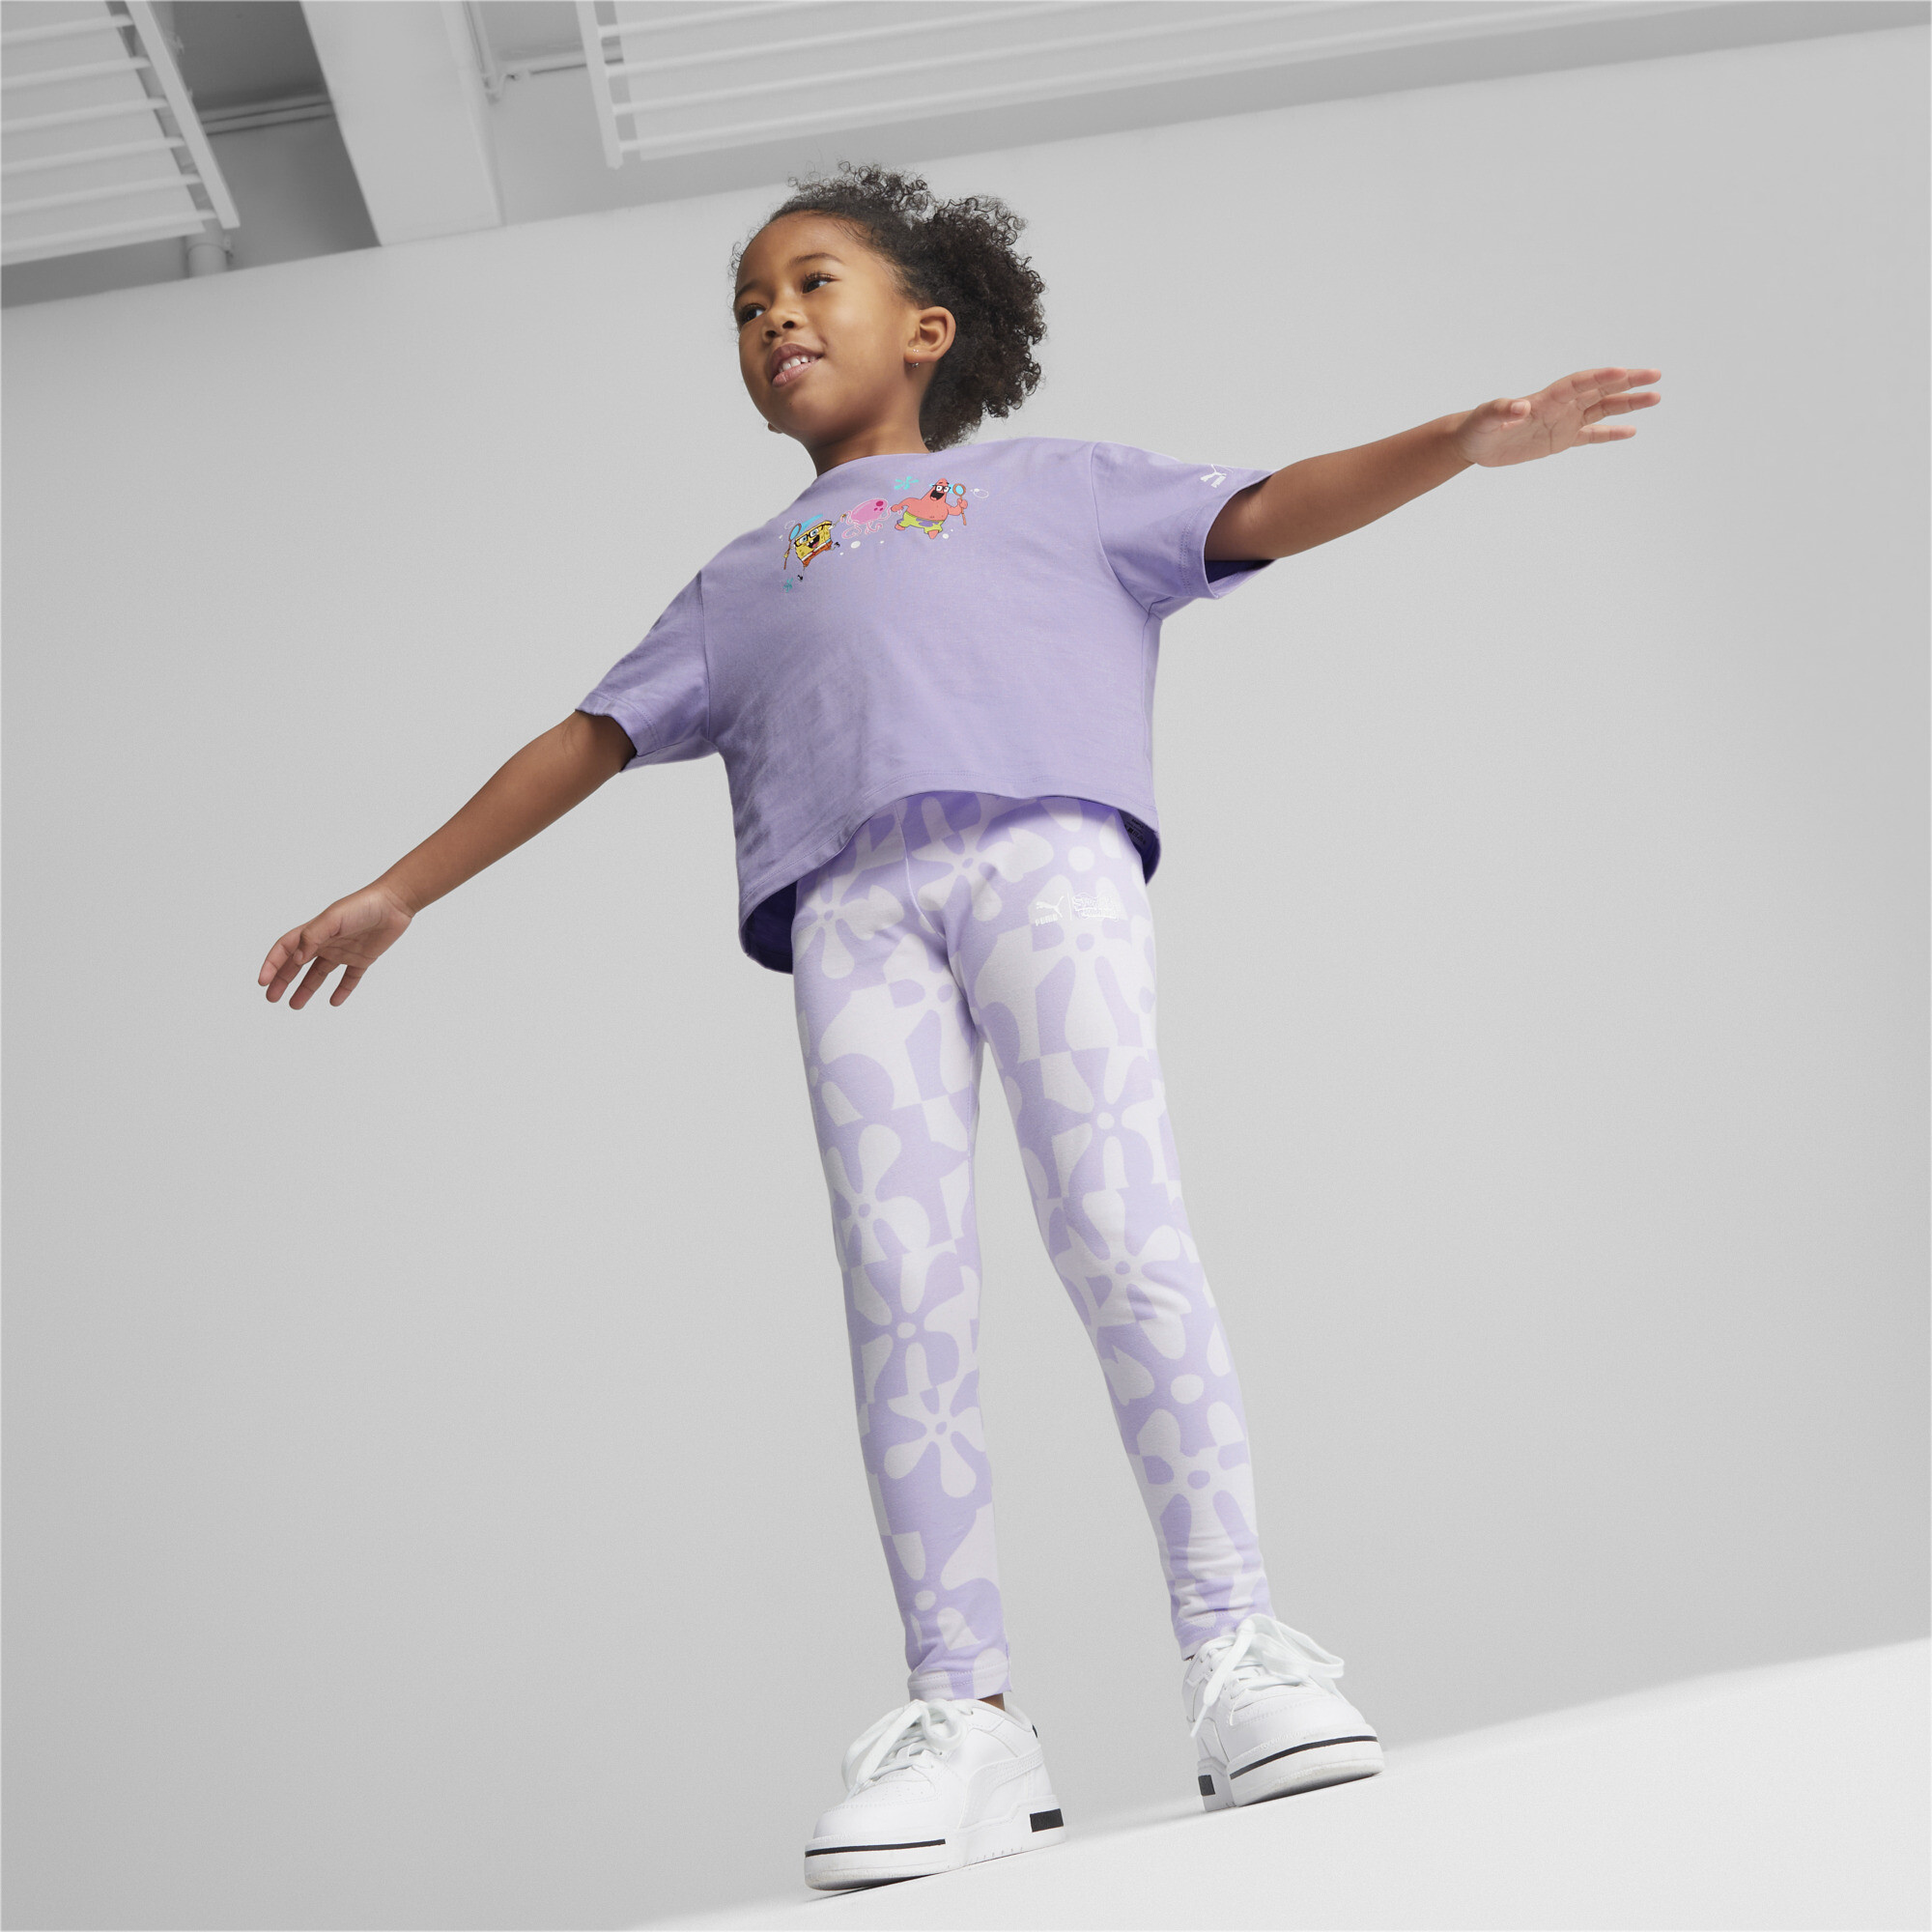 PUMA X SPONGEBOB T-Shirt Kids In Purple, Size 1-2 Youth